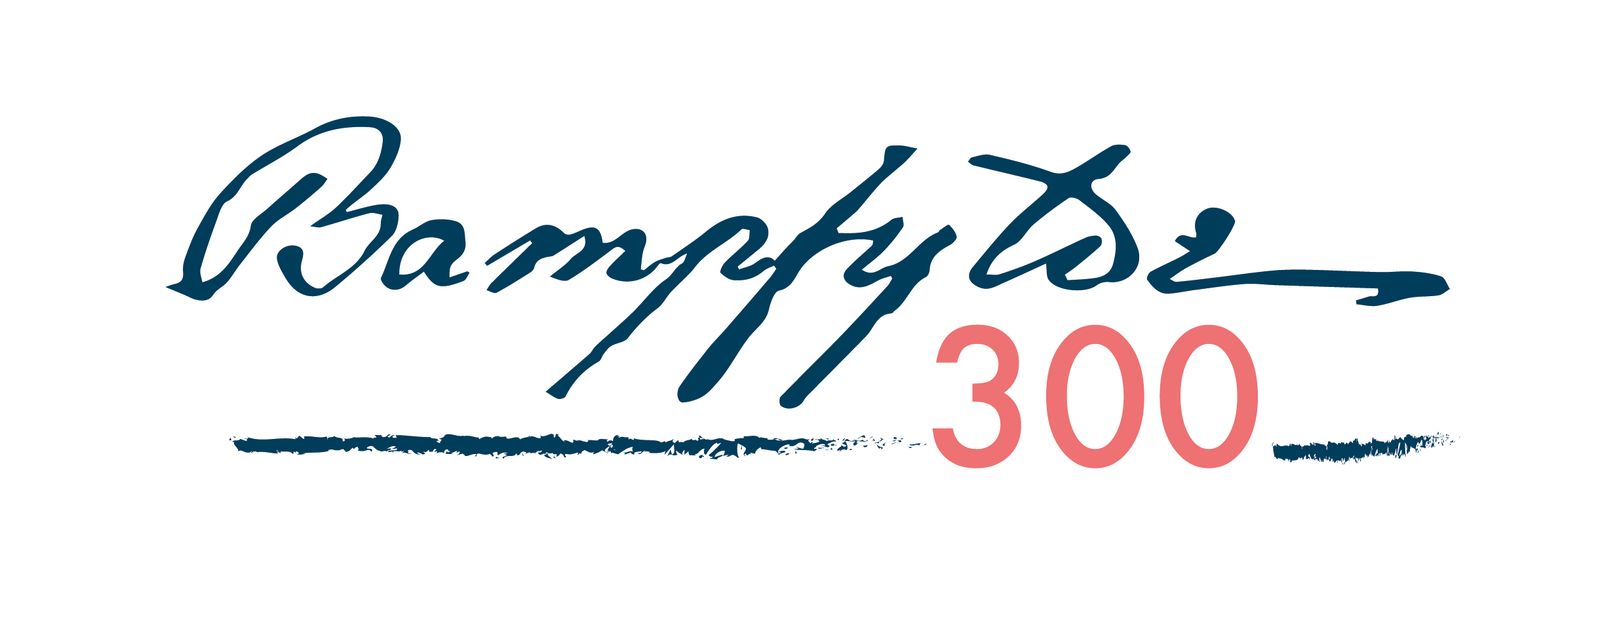 Bampfylde 300 logo - celebrating the tercentenary of Coplestone Warre Bampfylde